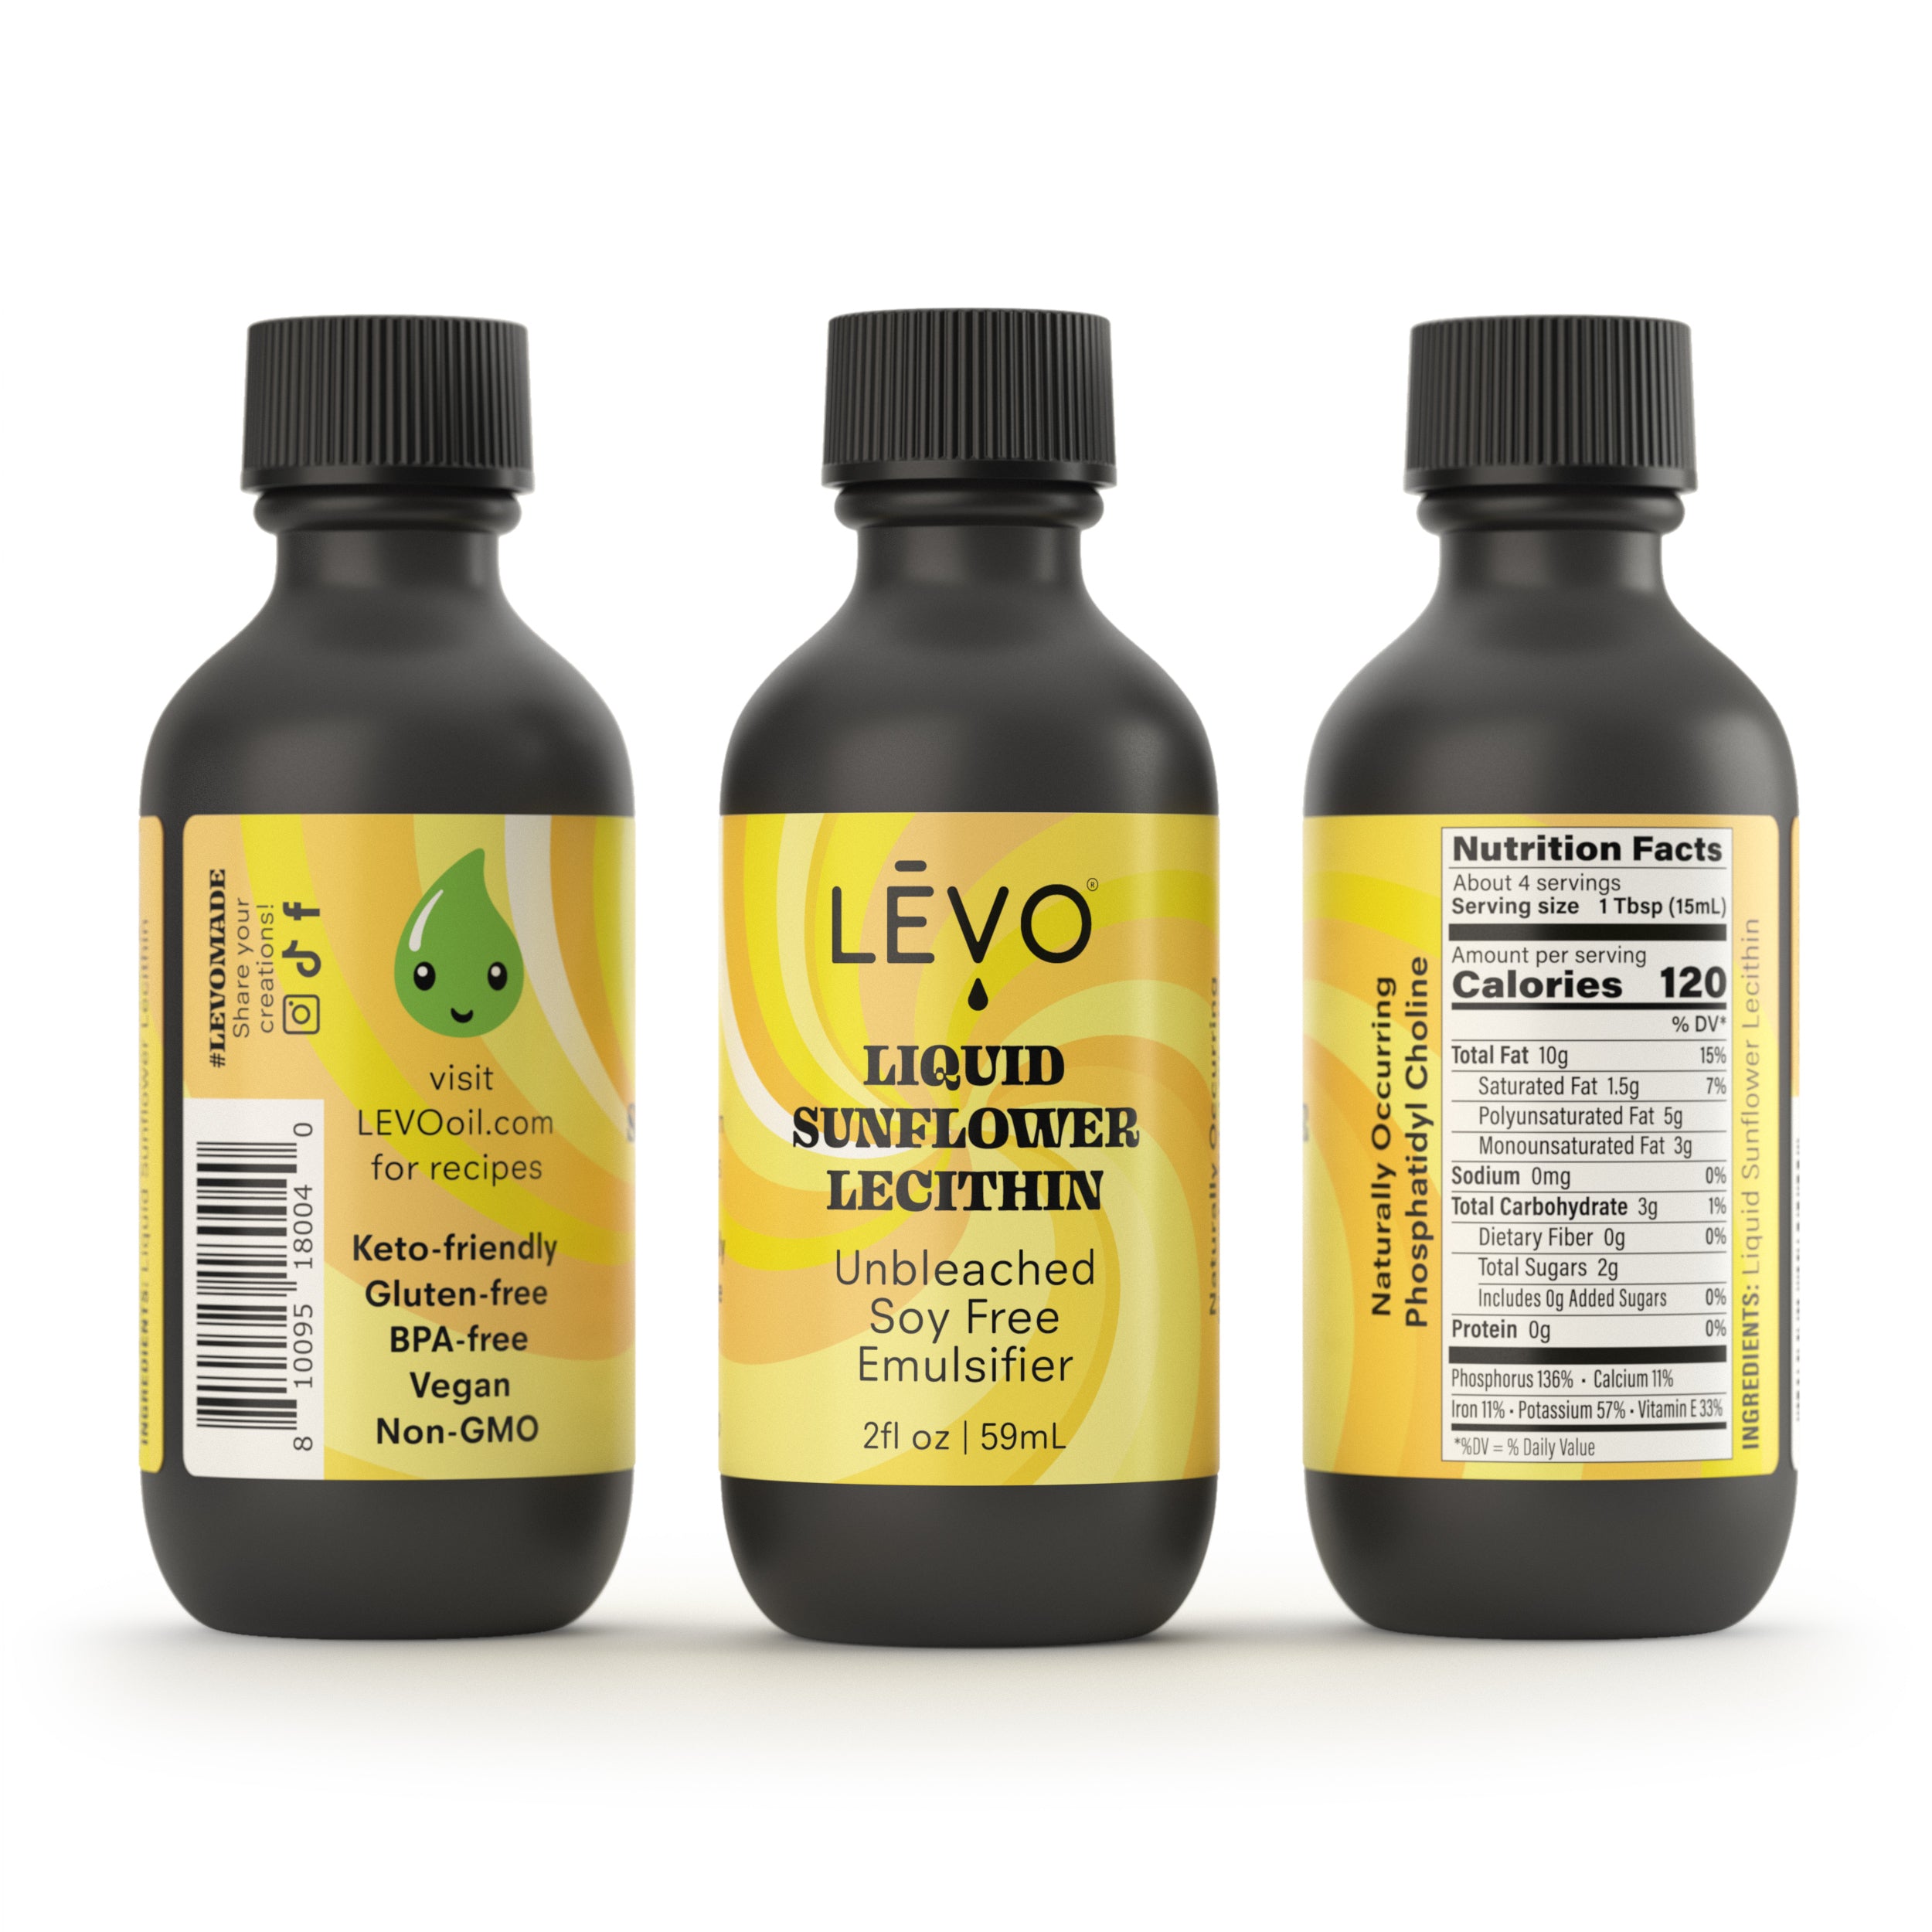 LEVO liquid sunflower lecithin 2oz nutrition facts